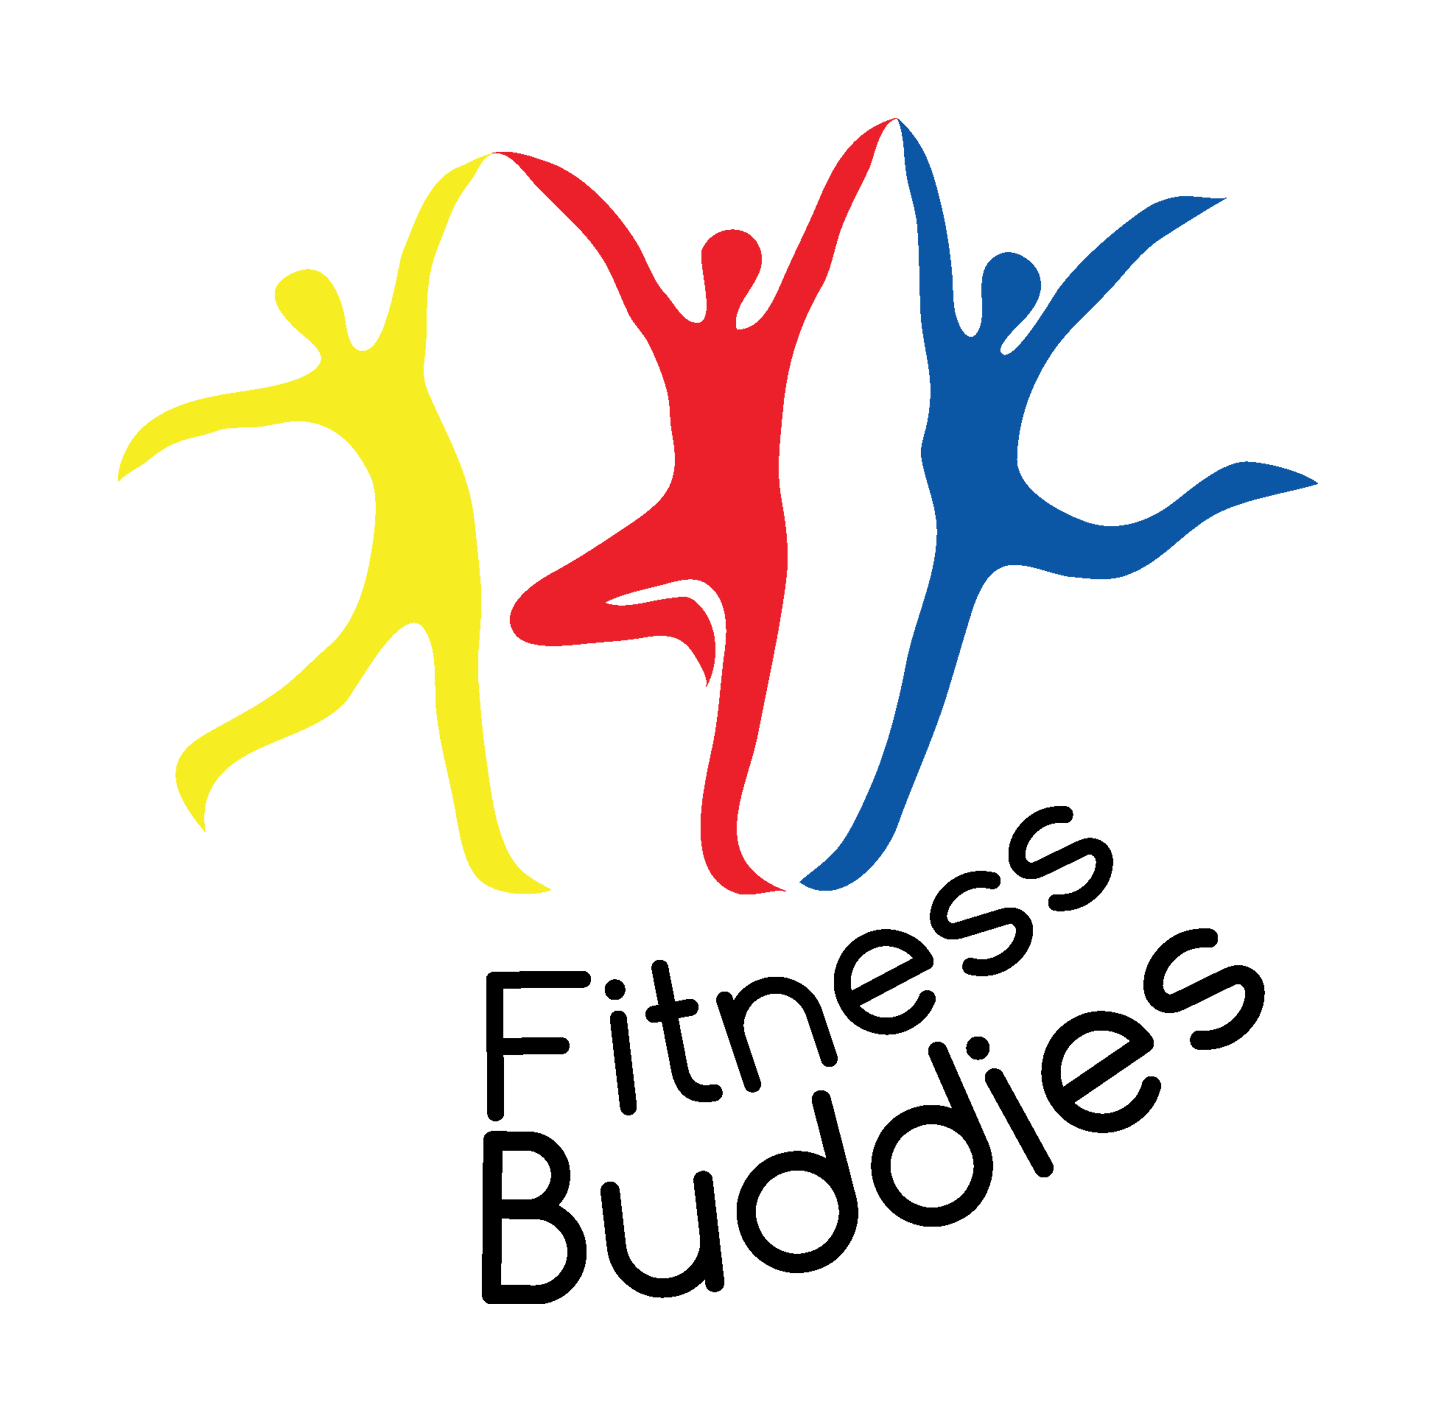 Buddies Logo - Bold, Modern, College Logo Design for Fitness Buddies or FB